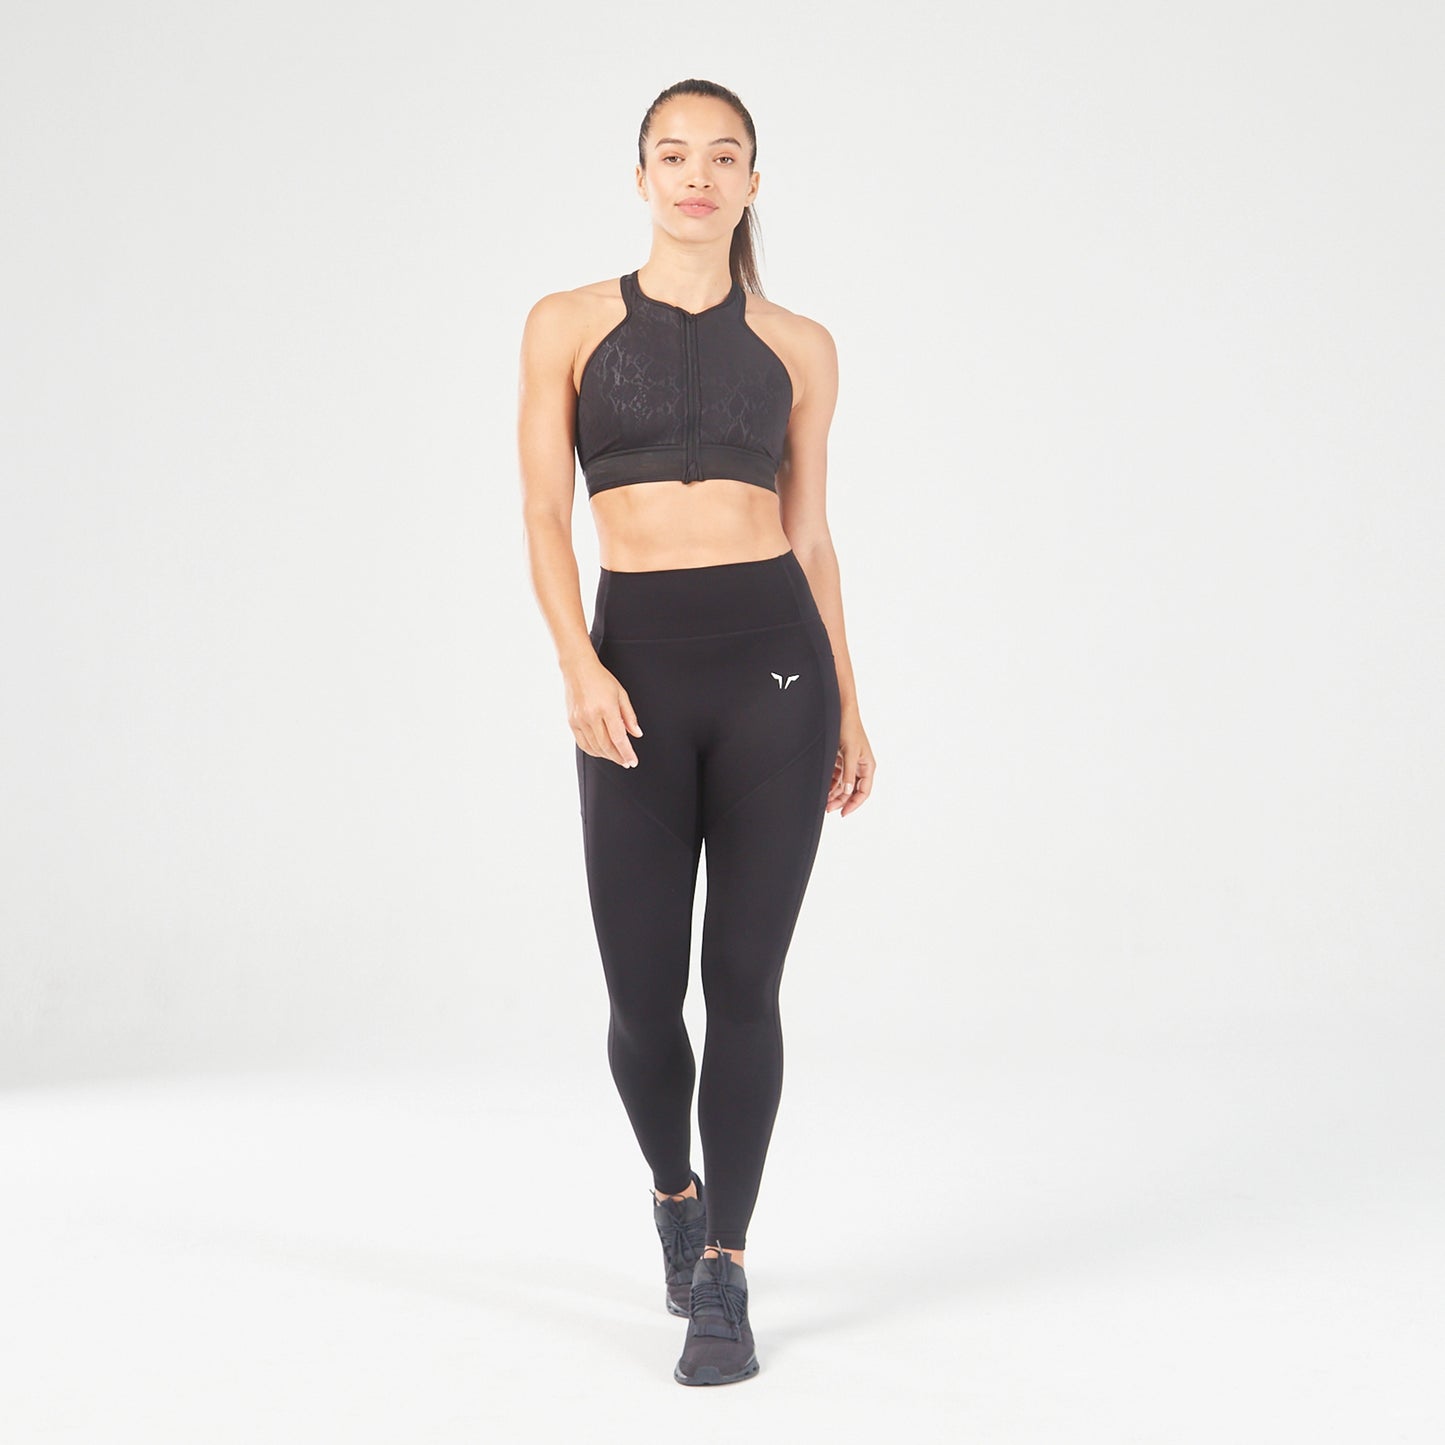 squatwolf-workout-clothes-serpent-zip-up-bra-black-sports-bra-for-gym